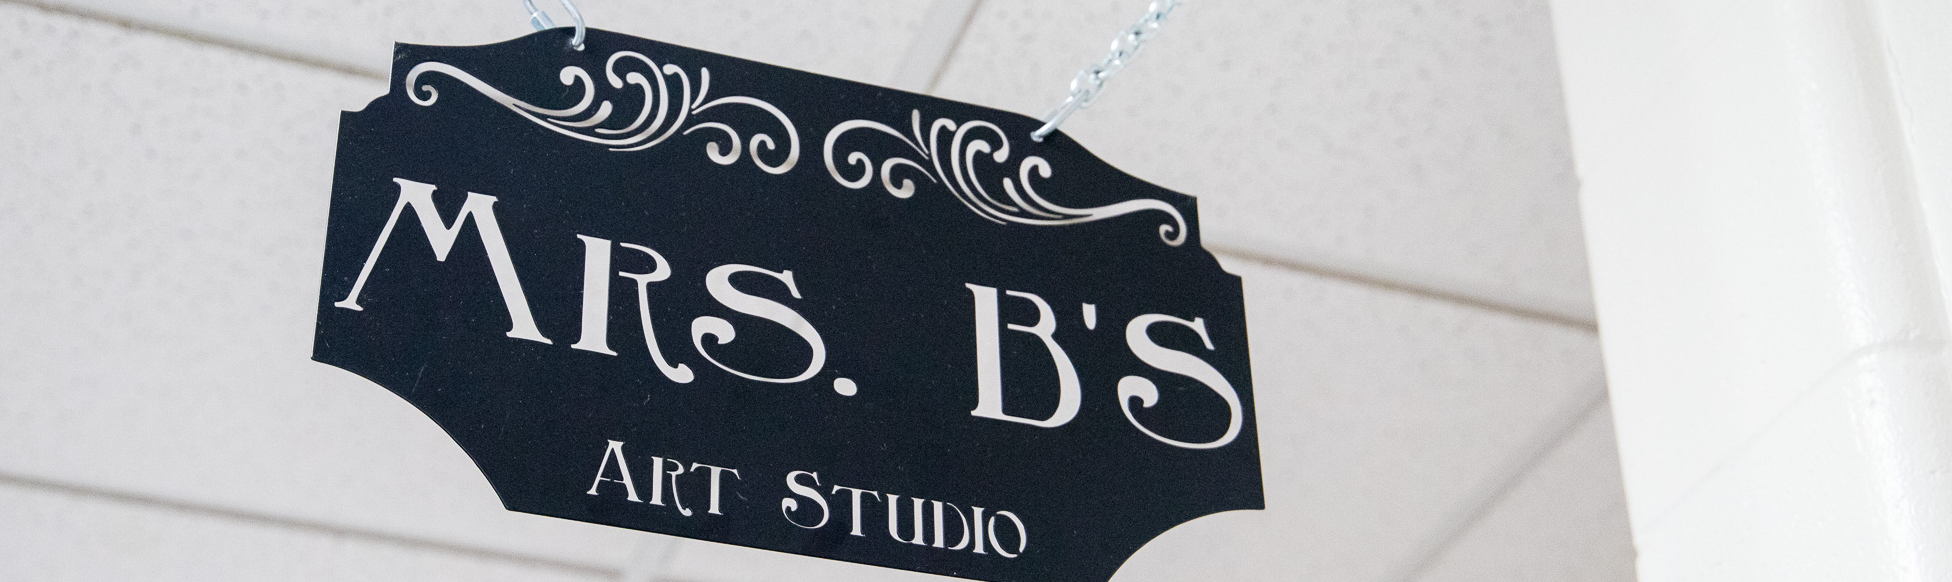 Mrs. B's Art studio sign